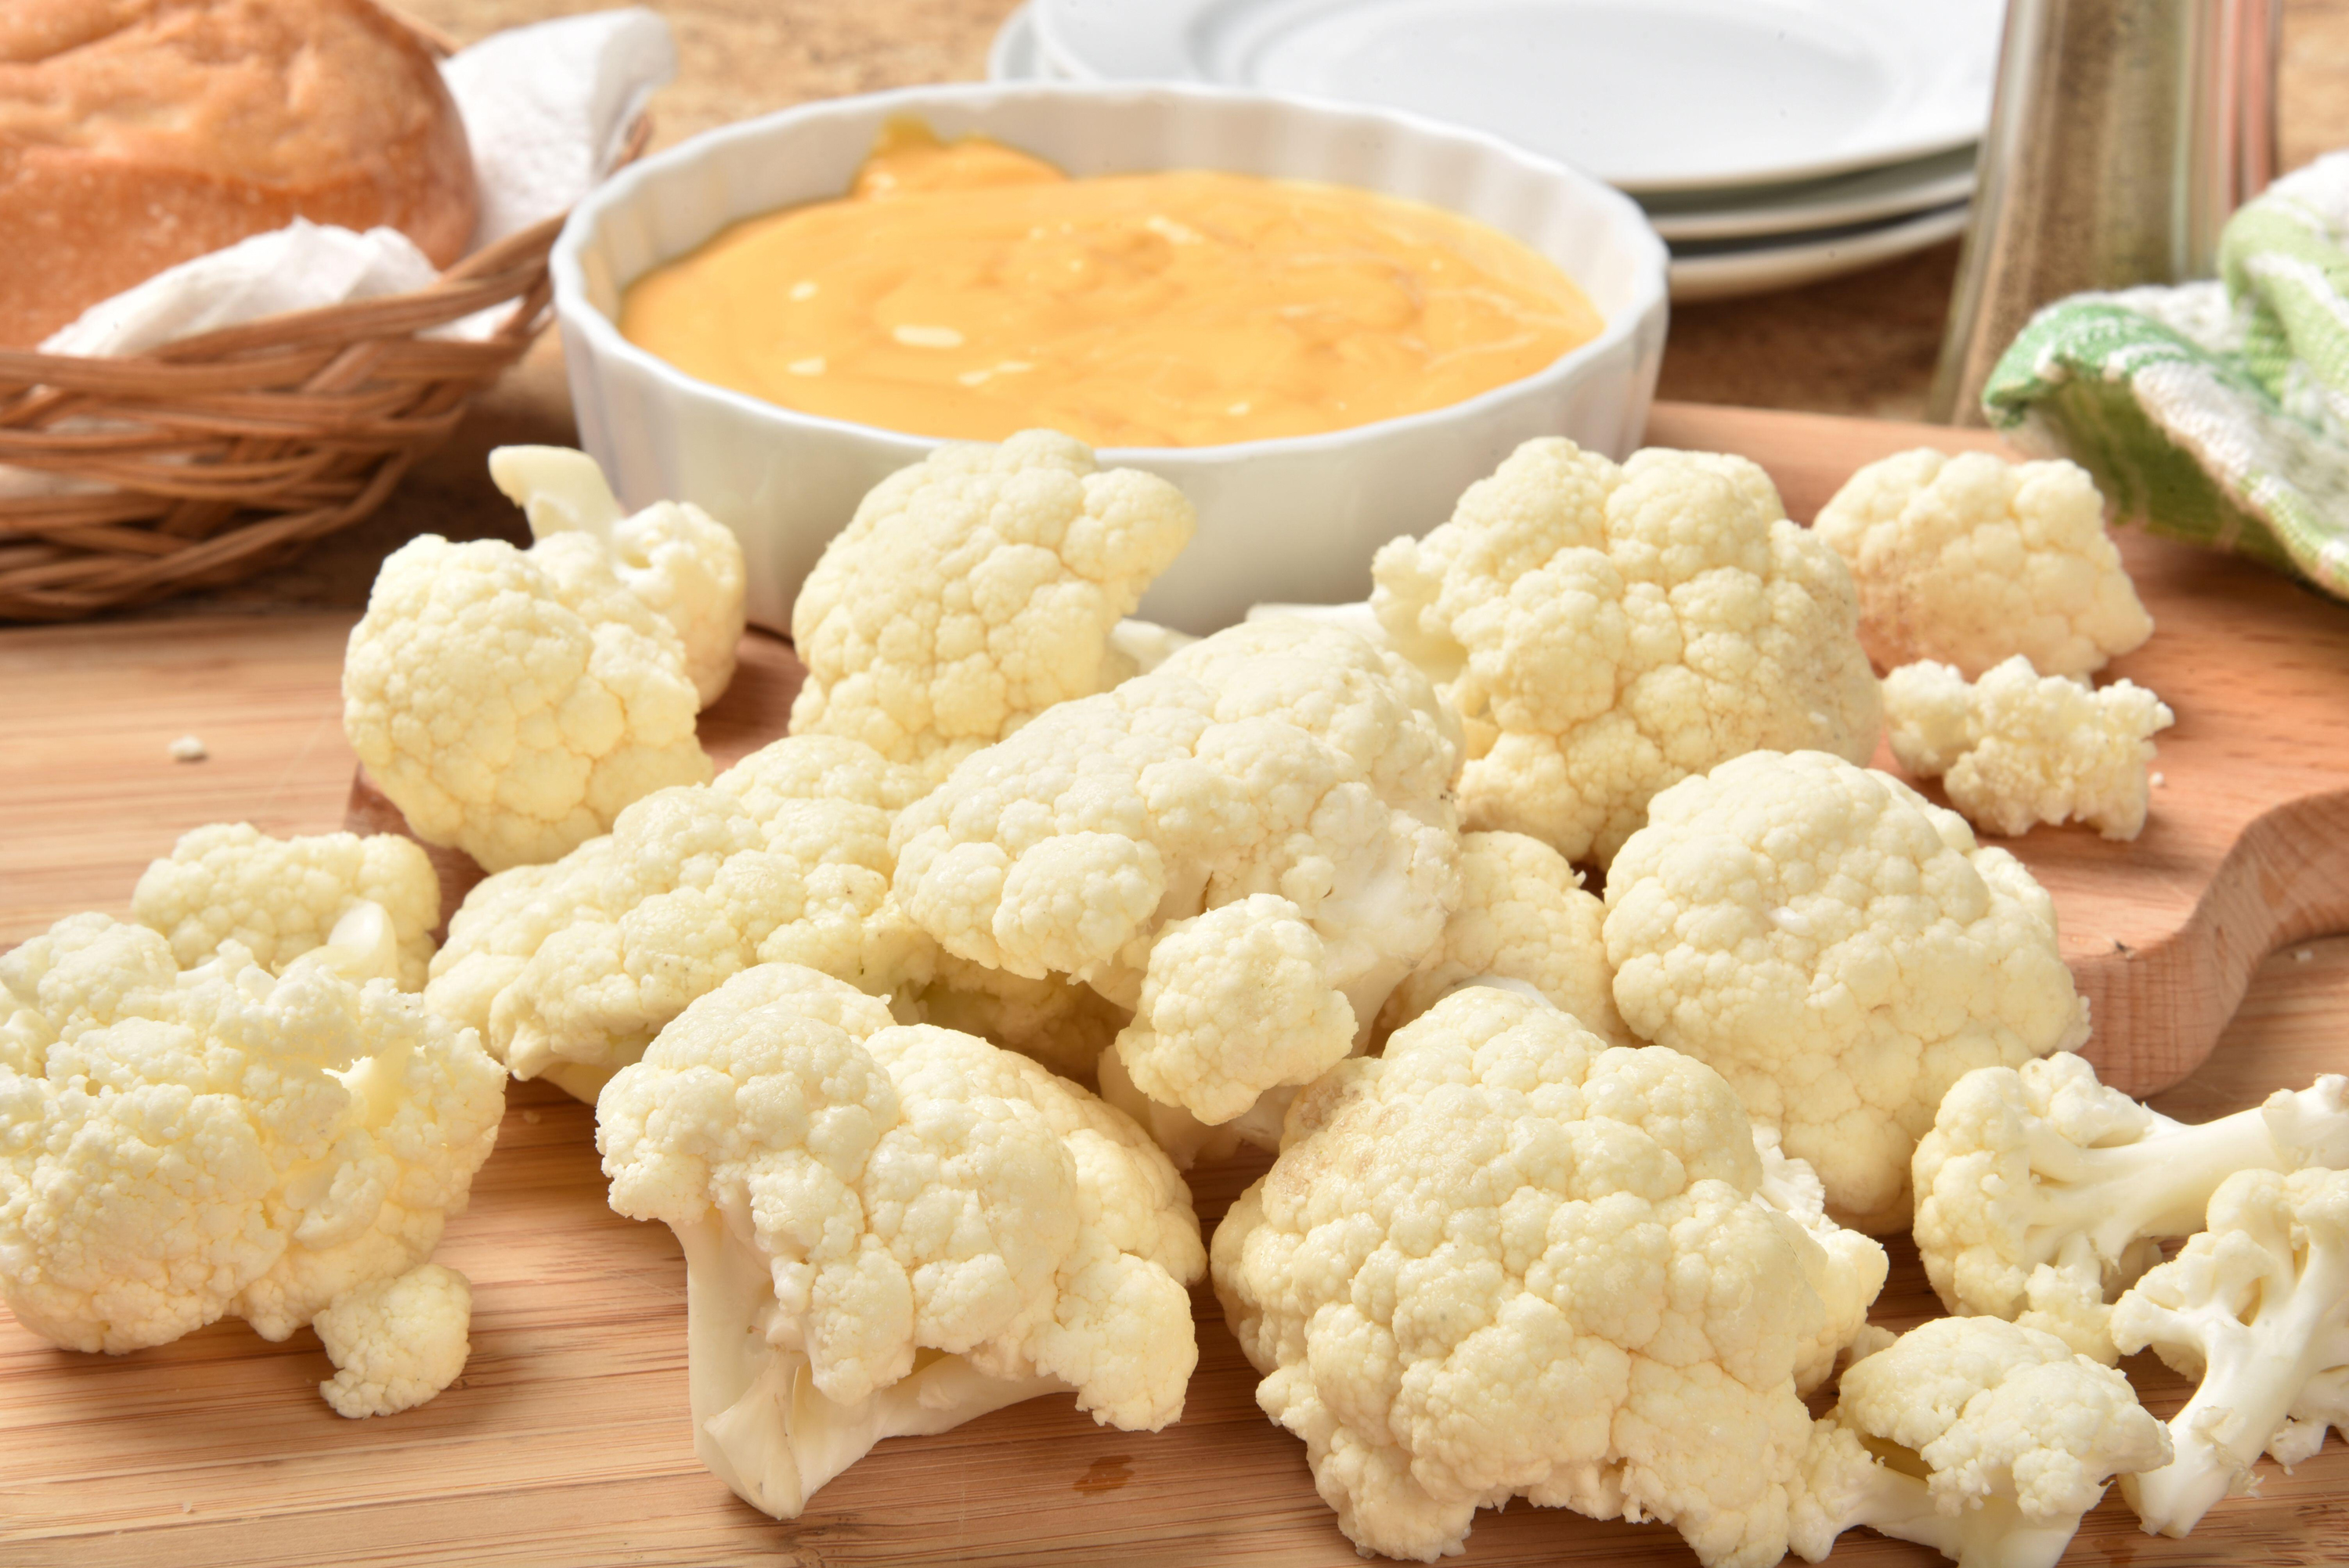 Cauliflower florets with cheese dip